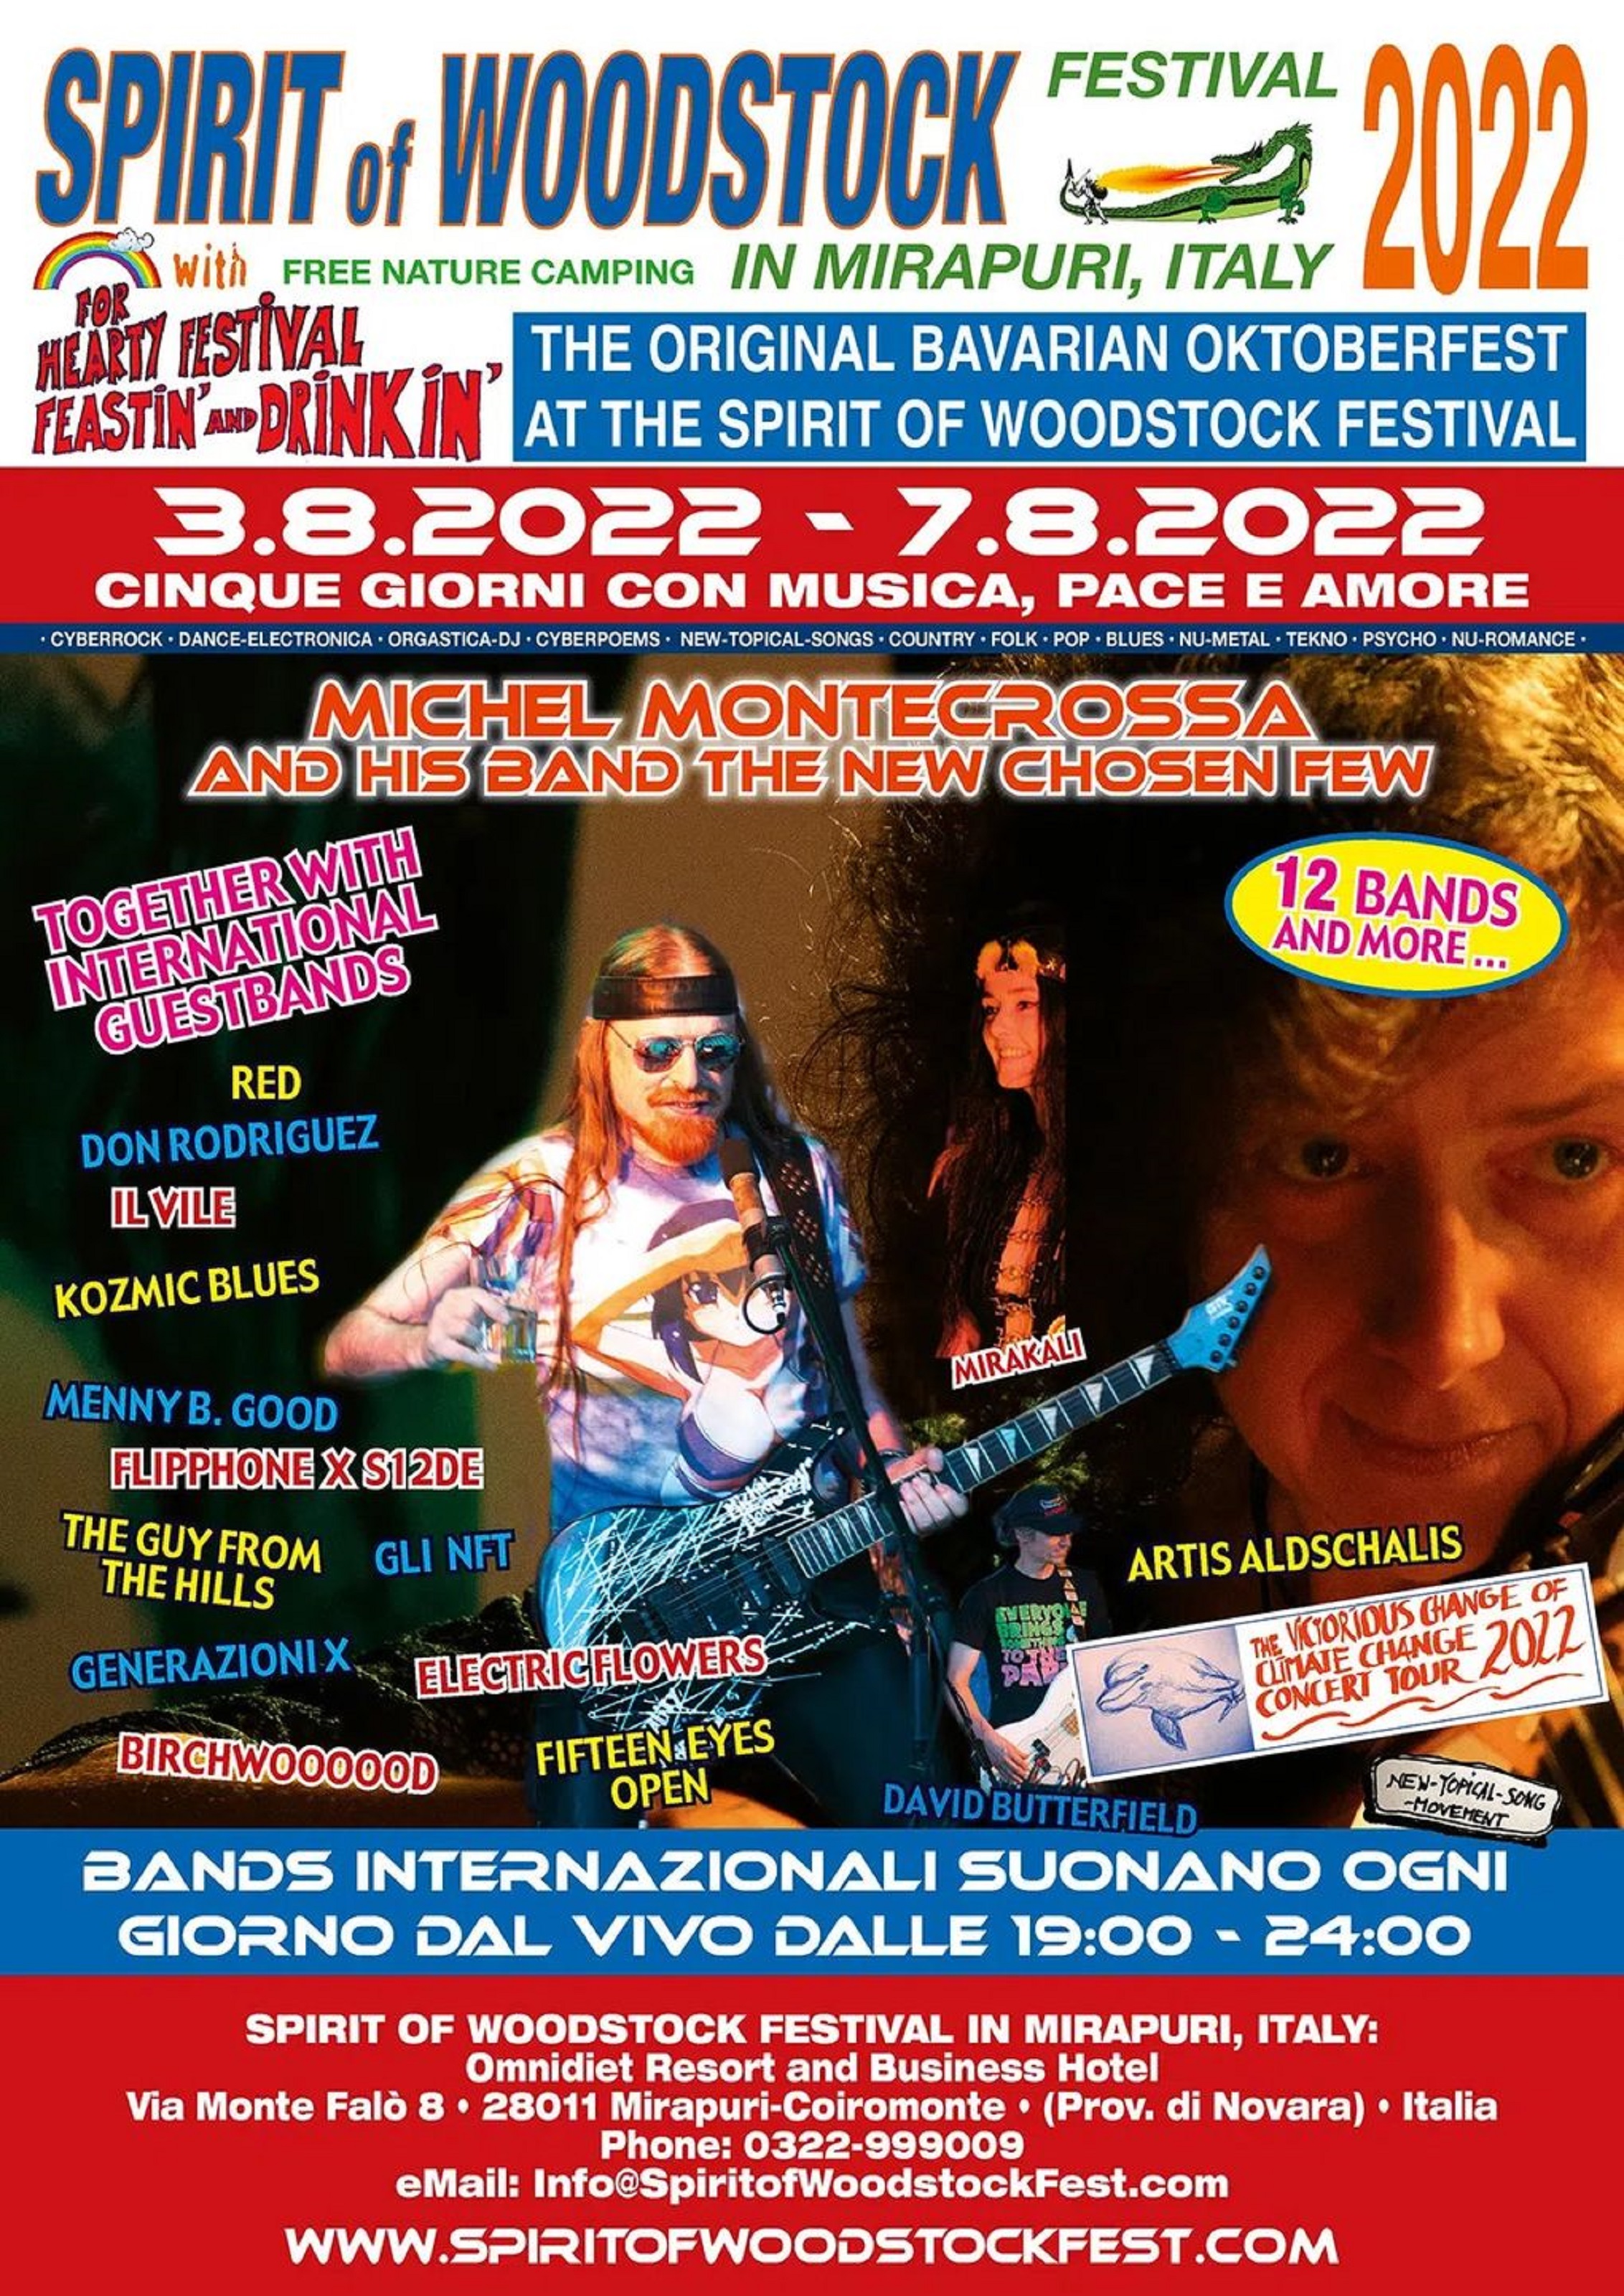 Spirit of Woodstock Festival 2022 in Mirapuri, Italy will start tomorrow